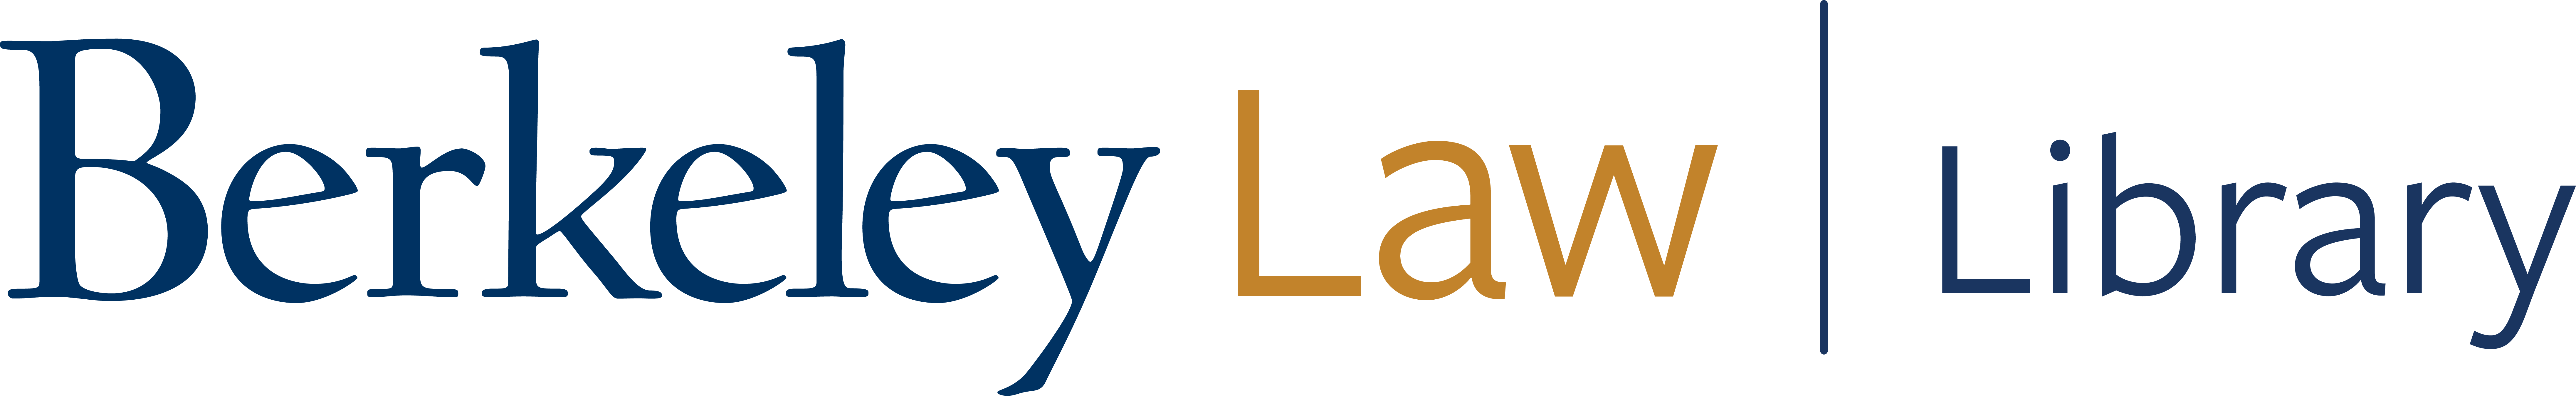 Berkeley Law Library logo